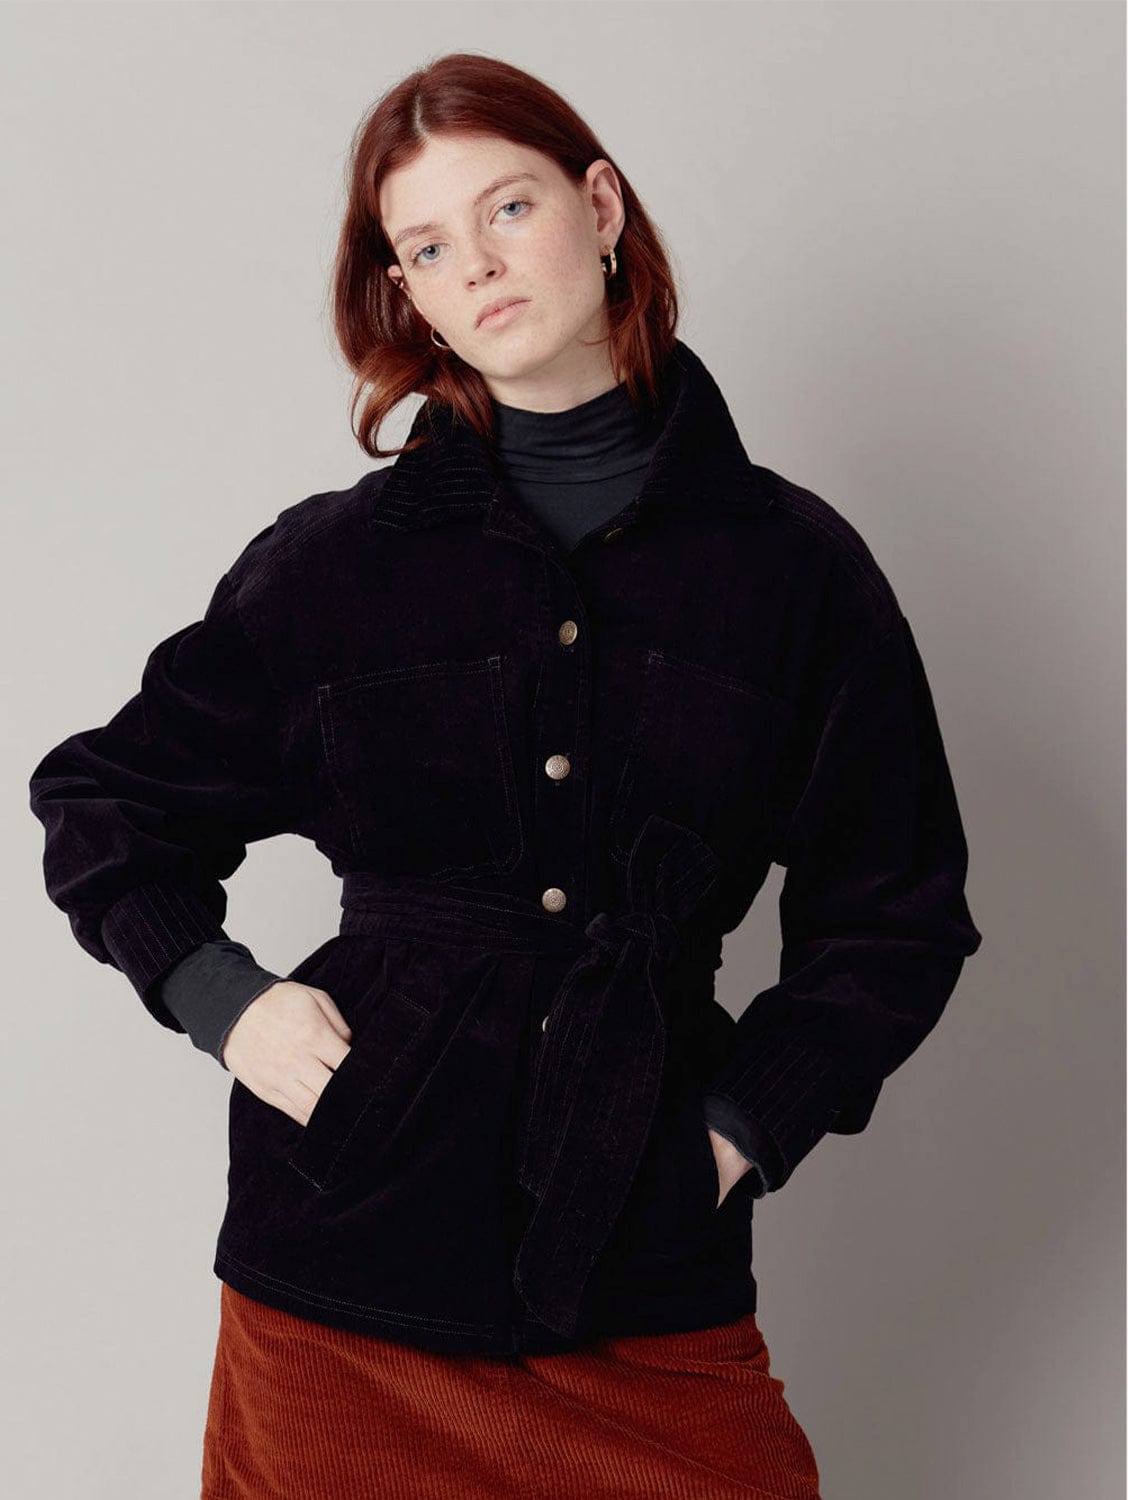 KOMODO Appolino Women's Organic Cotton Needle Cord Jacket | Black SIZE 1 / UK 8 / EUR 36